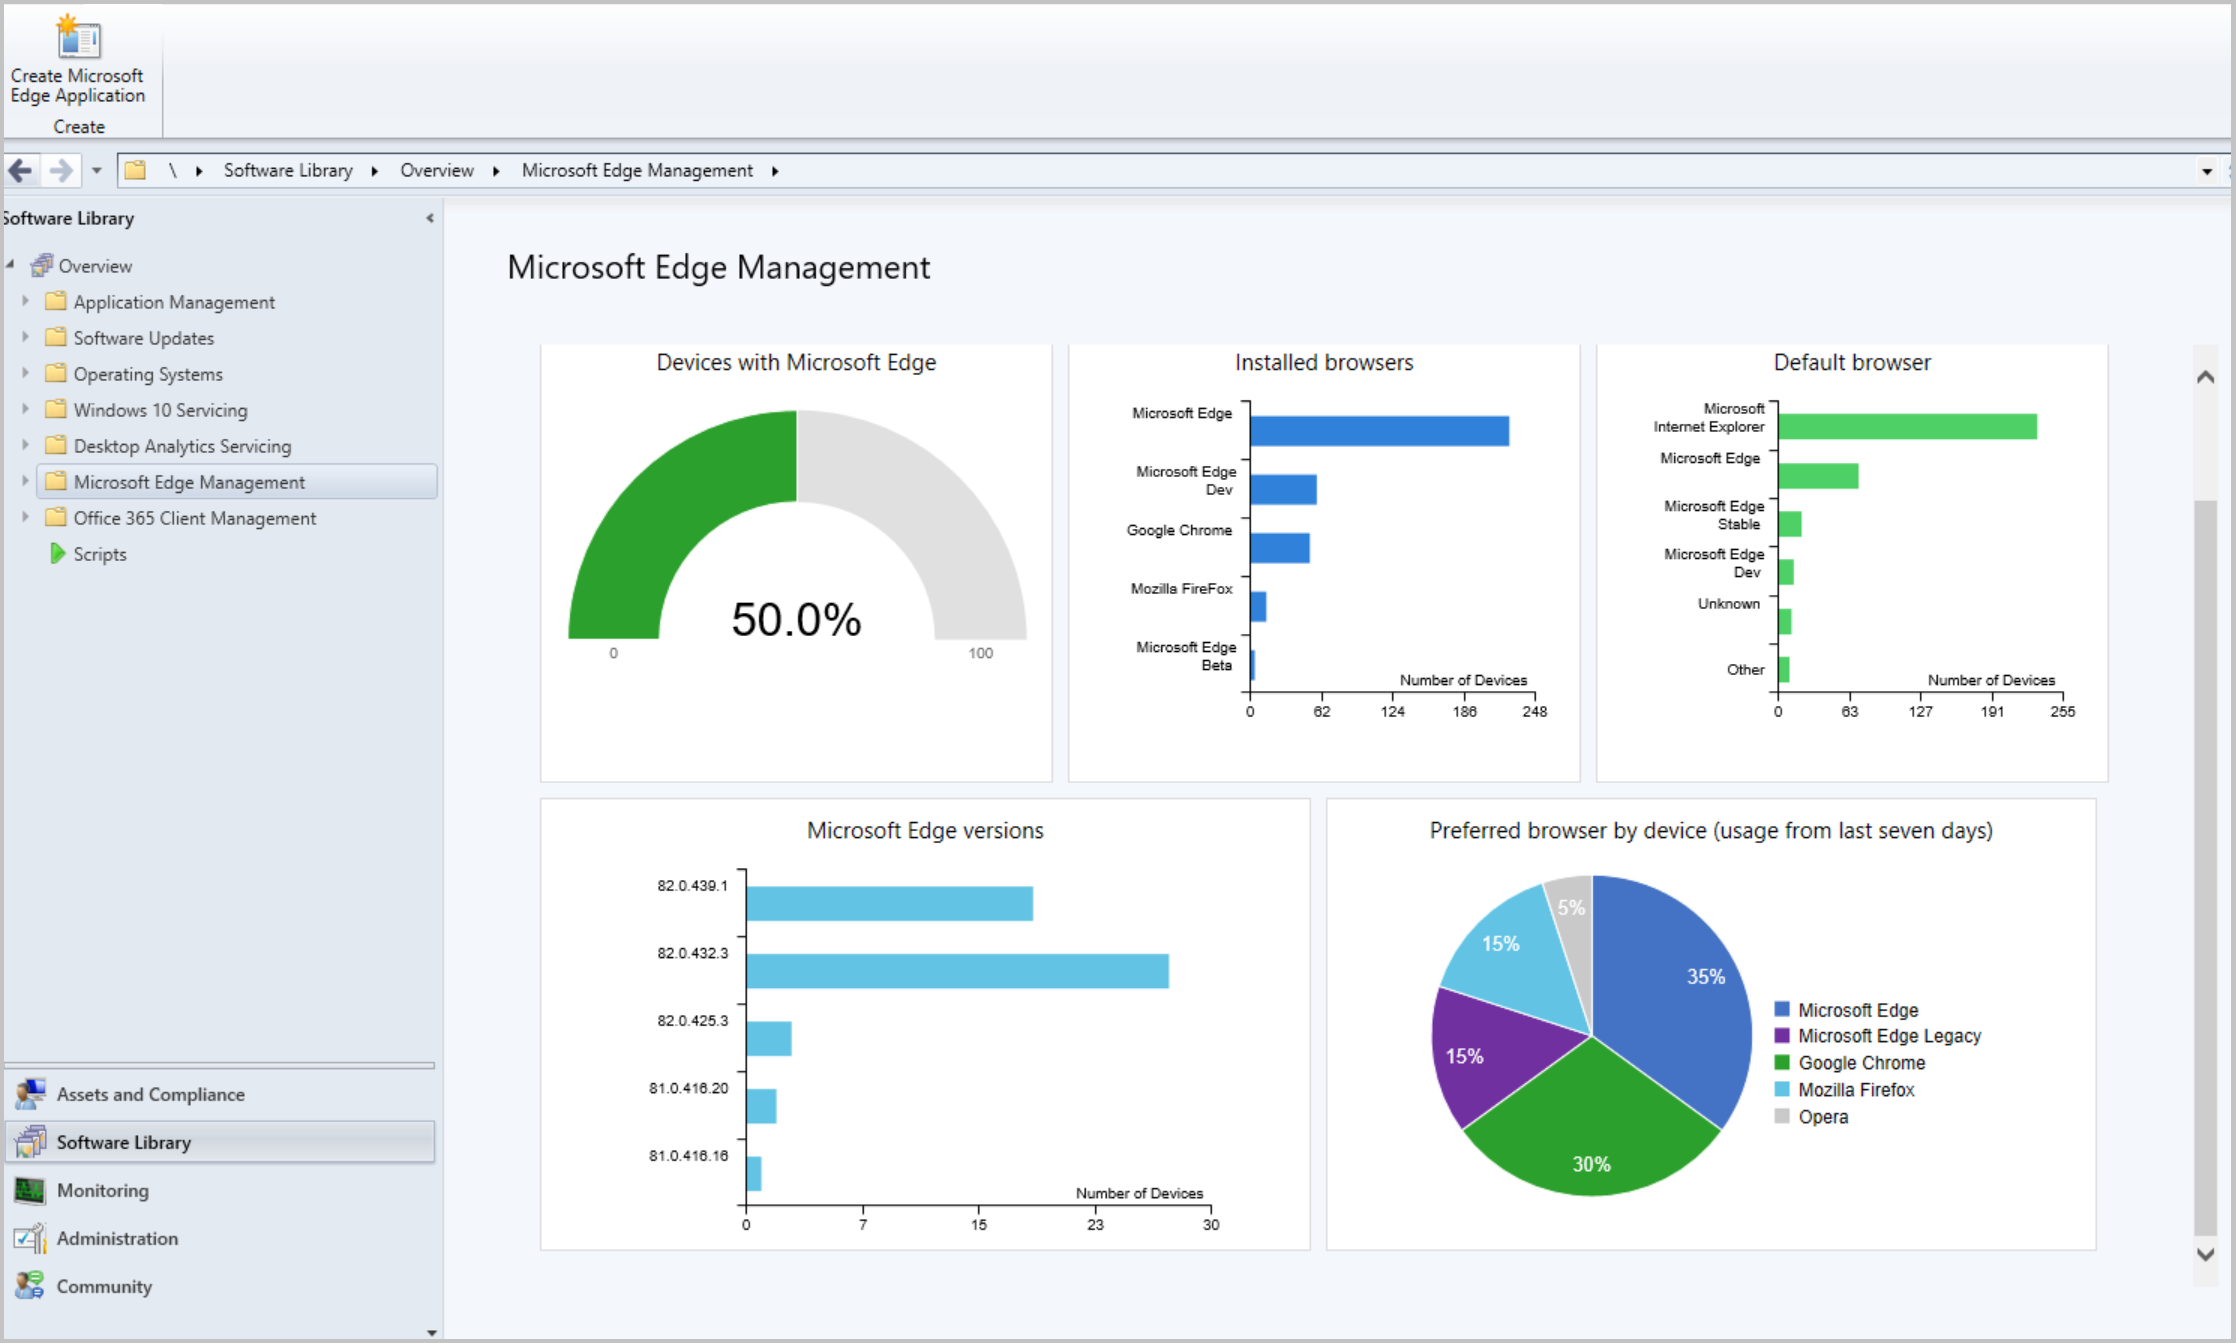 Microsoft Edge Management dashboard